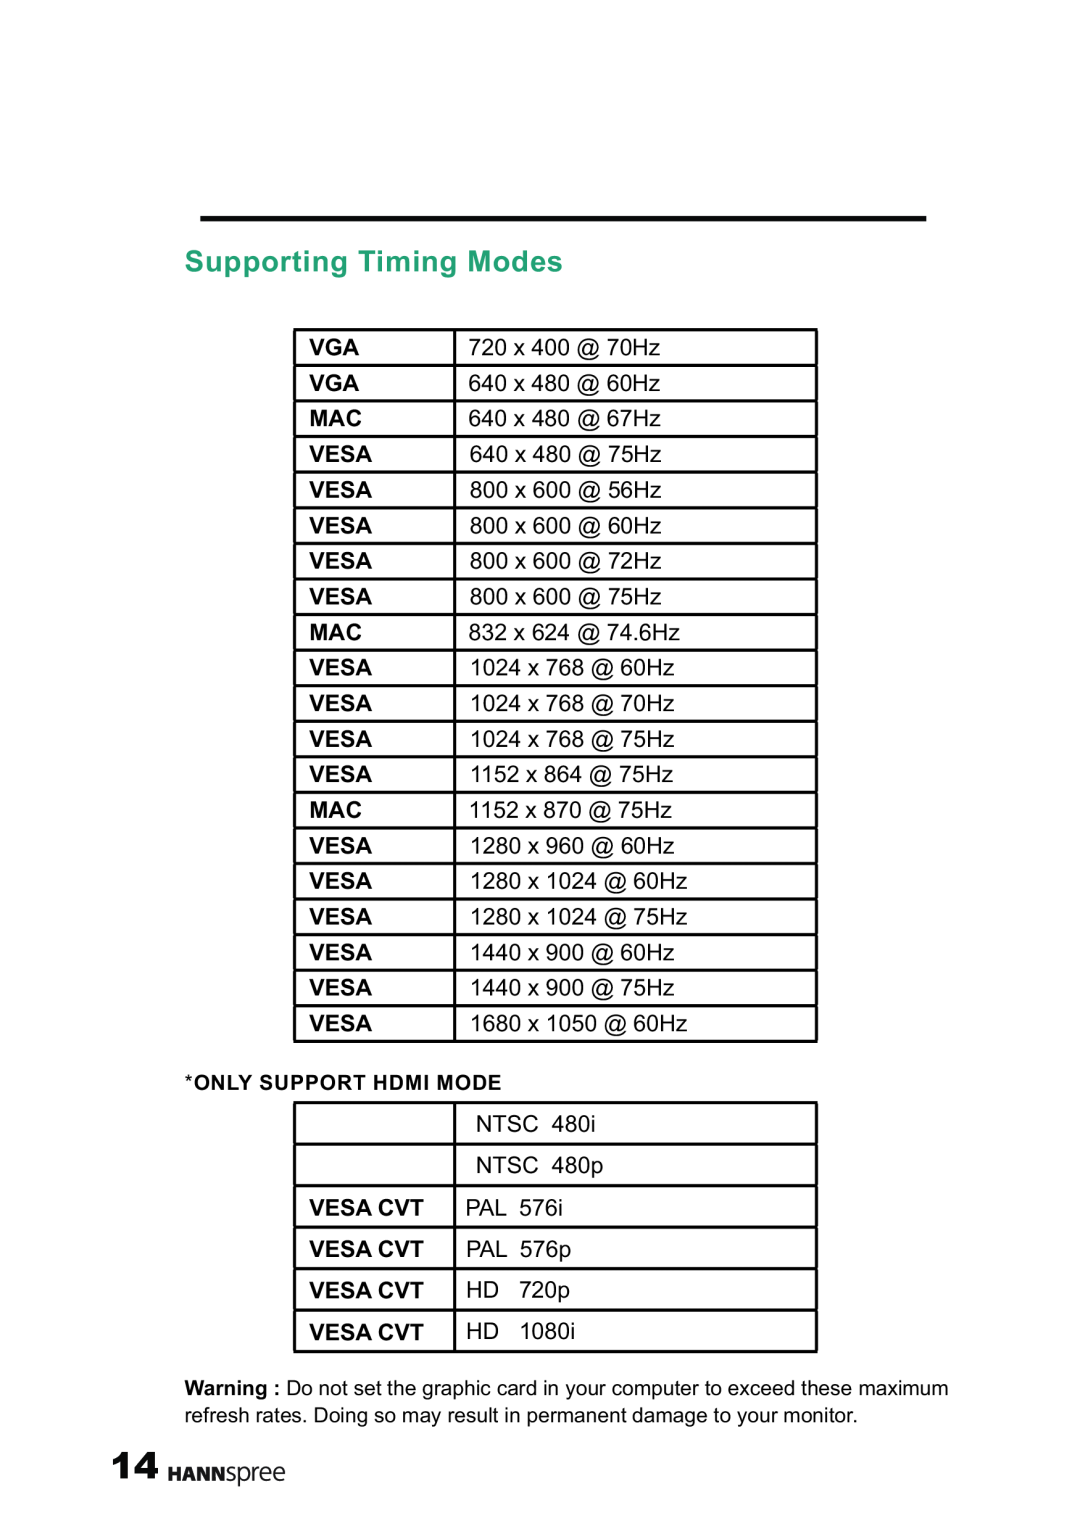 HANNspree XM manual Supporting Timing Modes, Vesa Cvt 